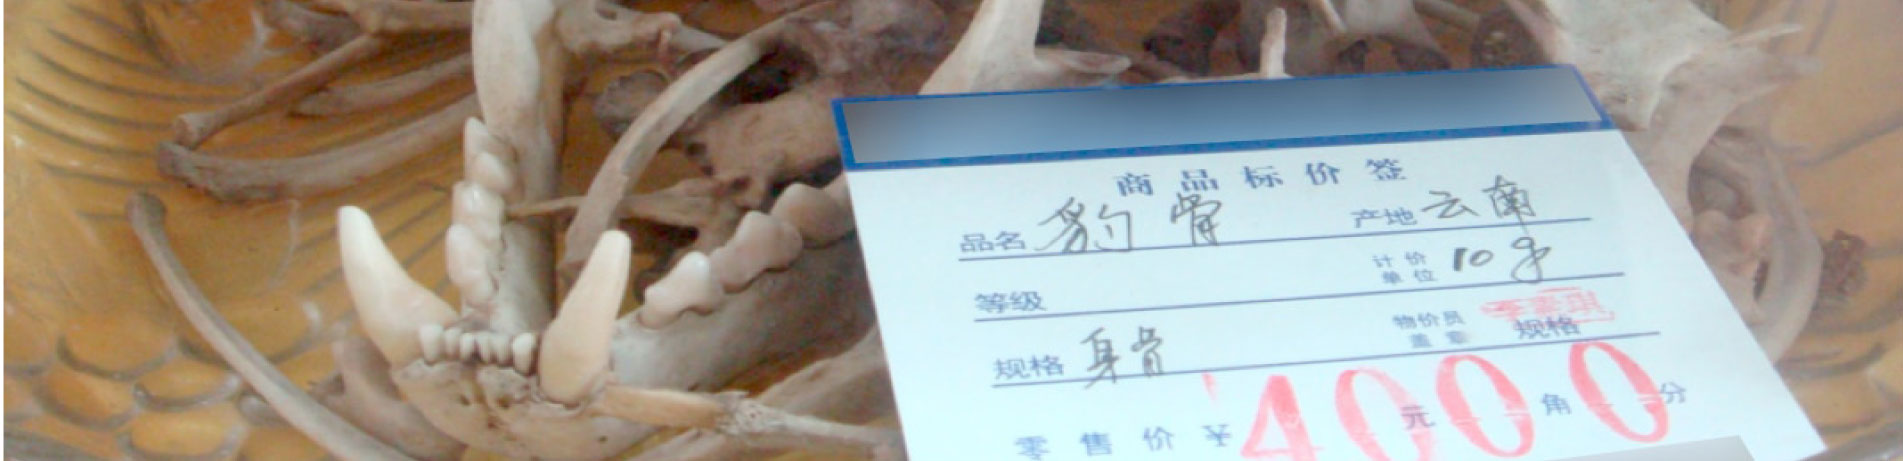 Leopard bone for sale, Chongqing, China